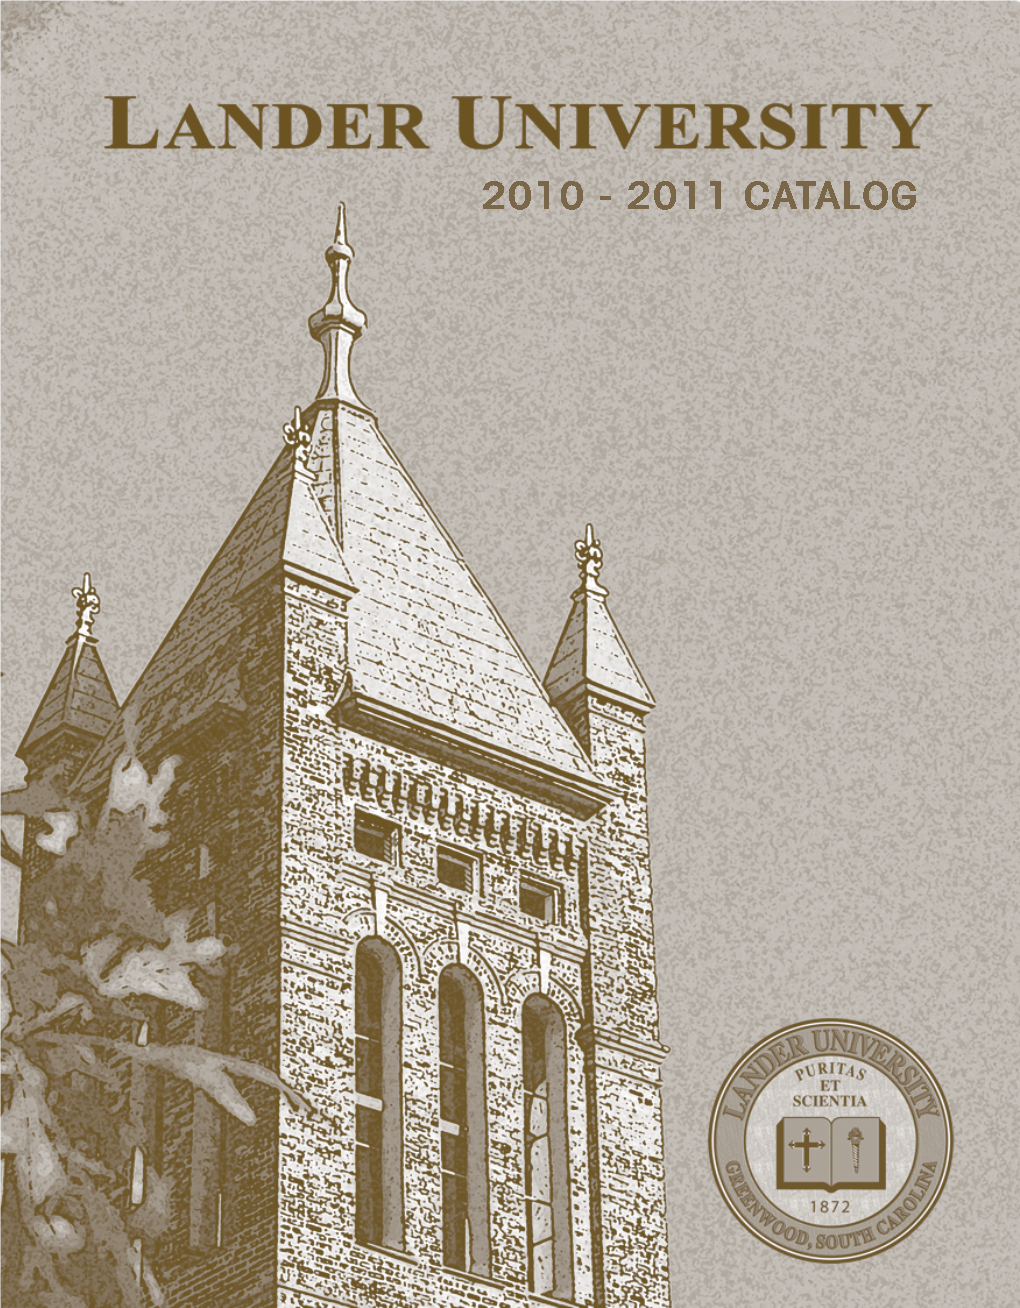 Lander University 2010-2011 Catalog